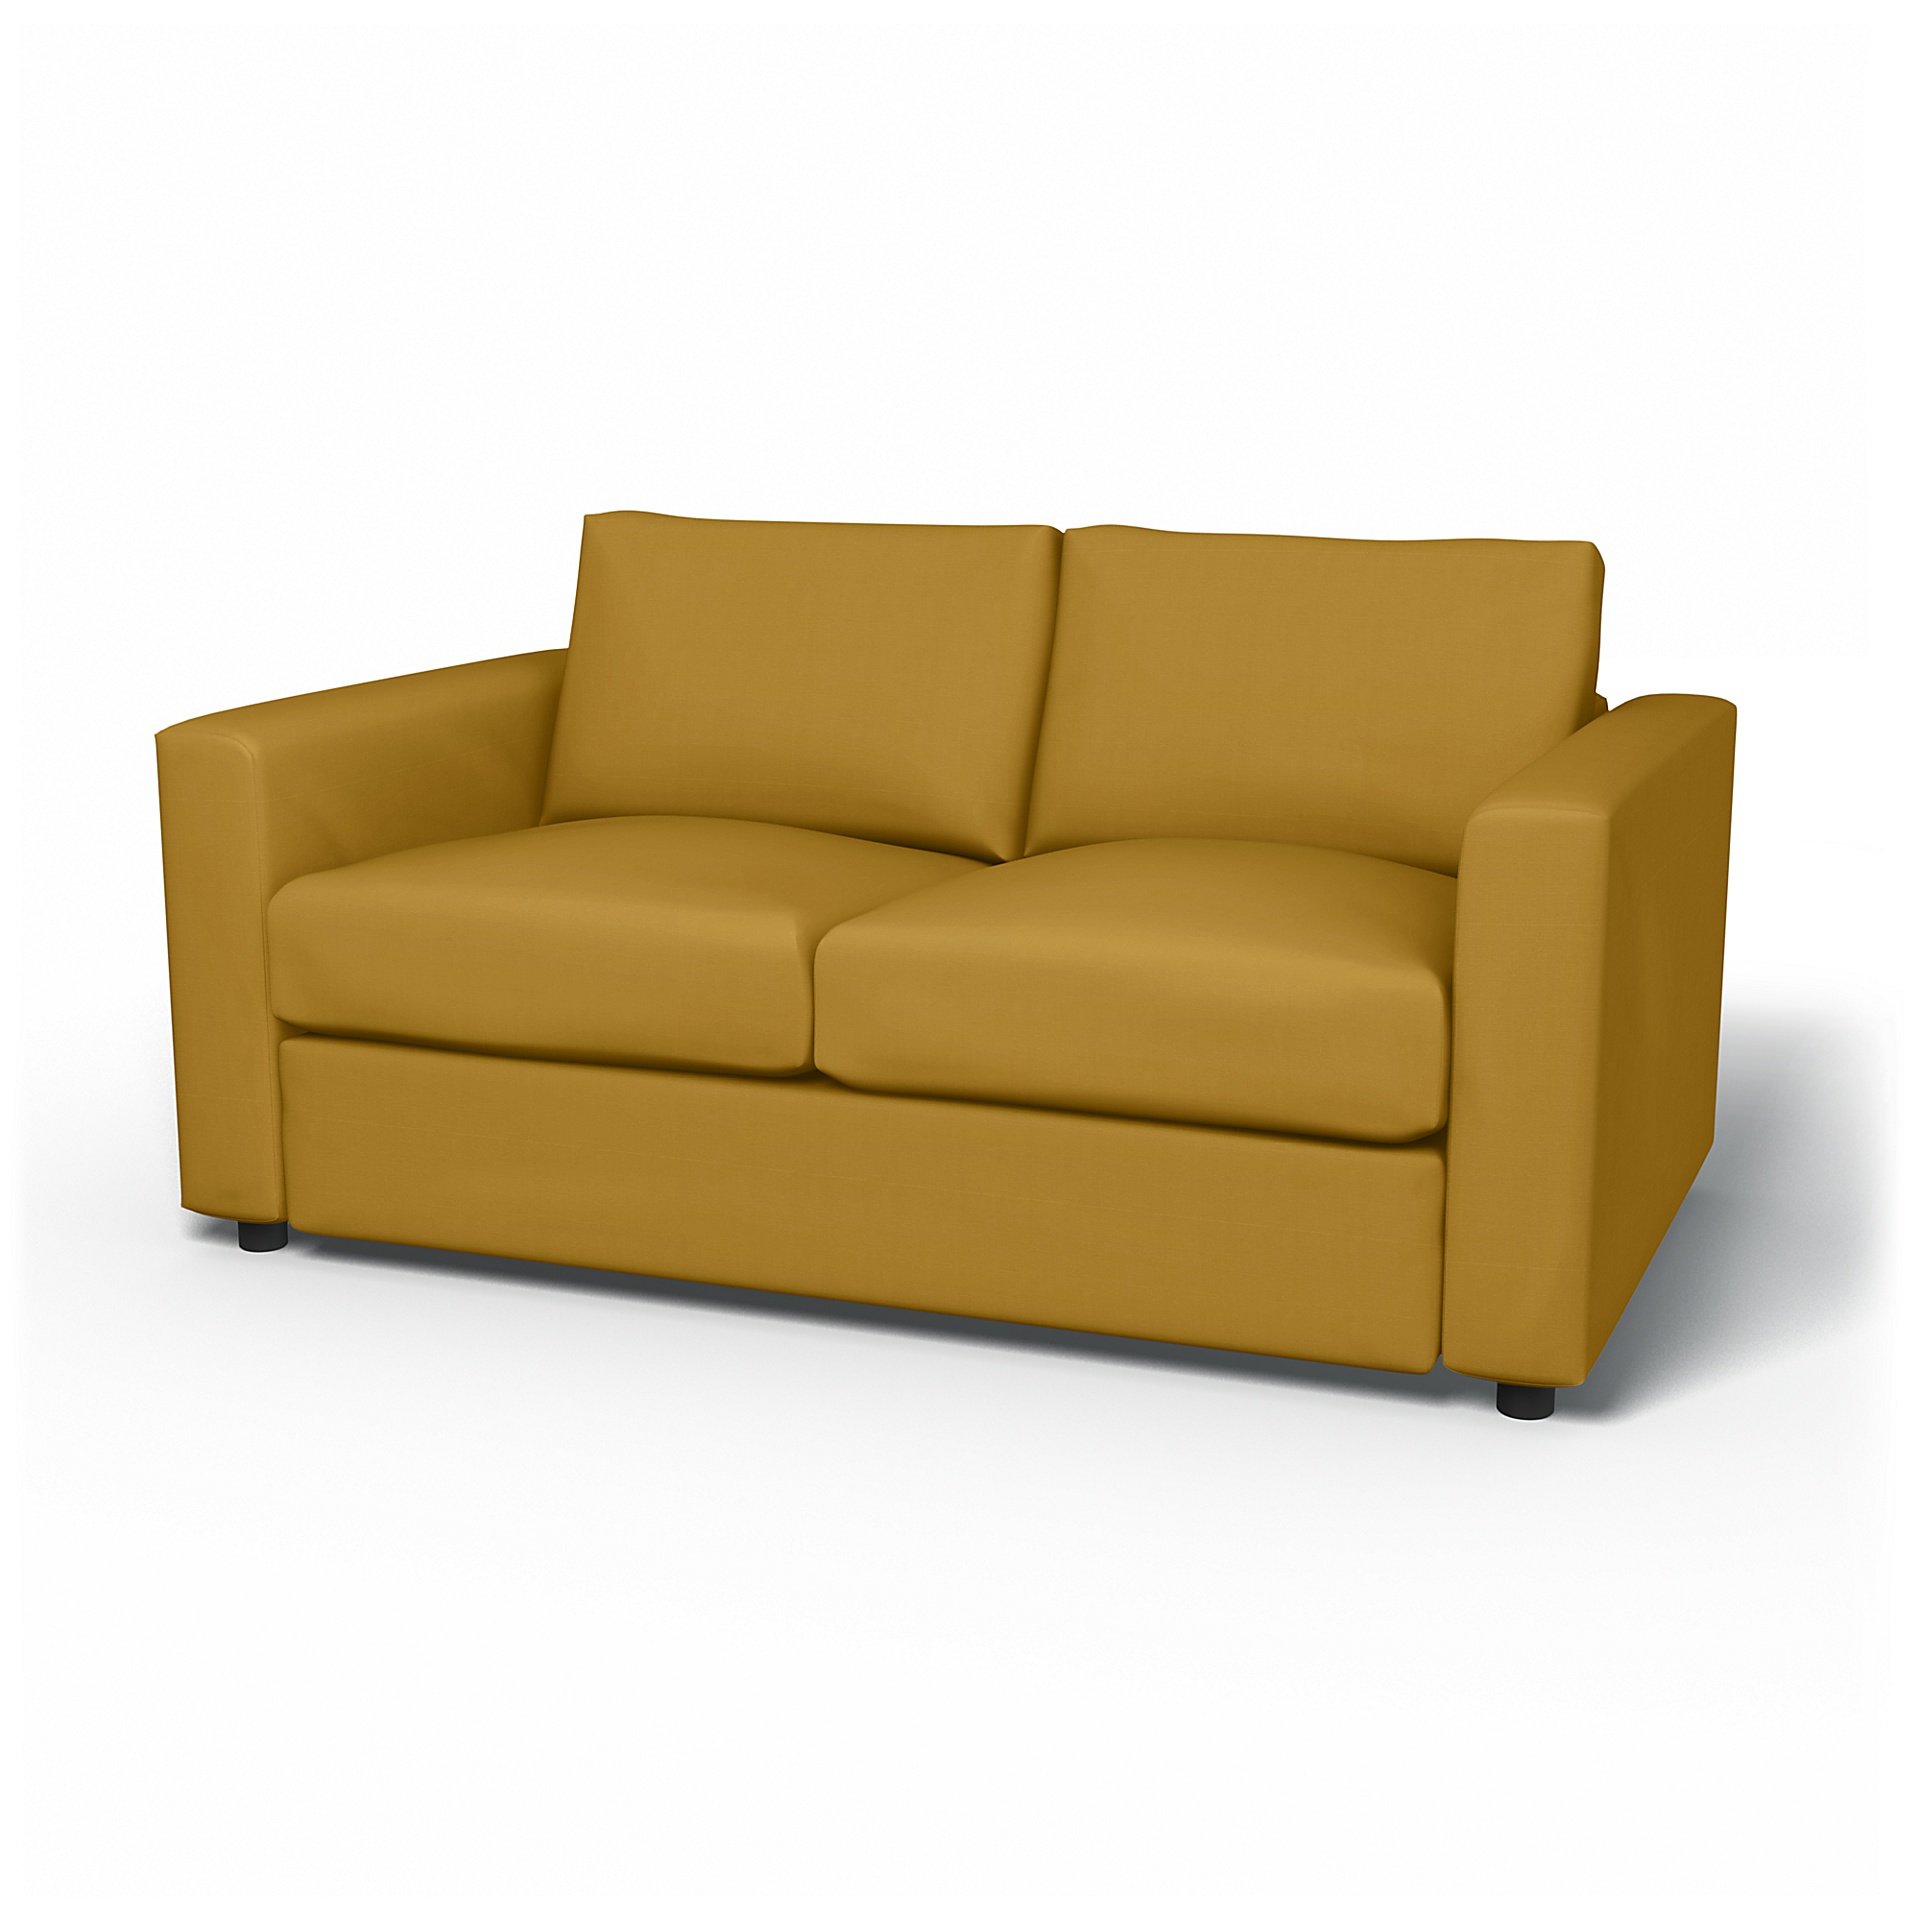 IKEA - Vimle 2 Seater Sofa Cover, Honey Mustard, Cotton - Bemz